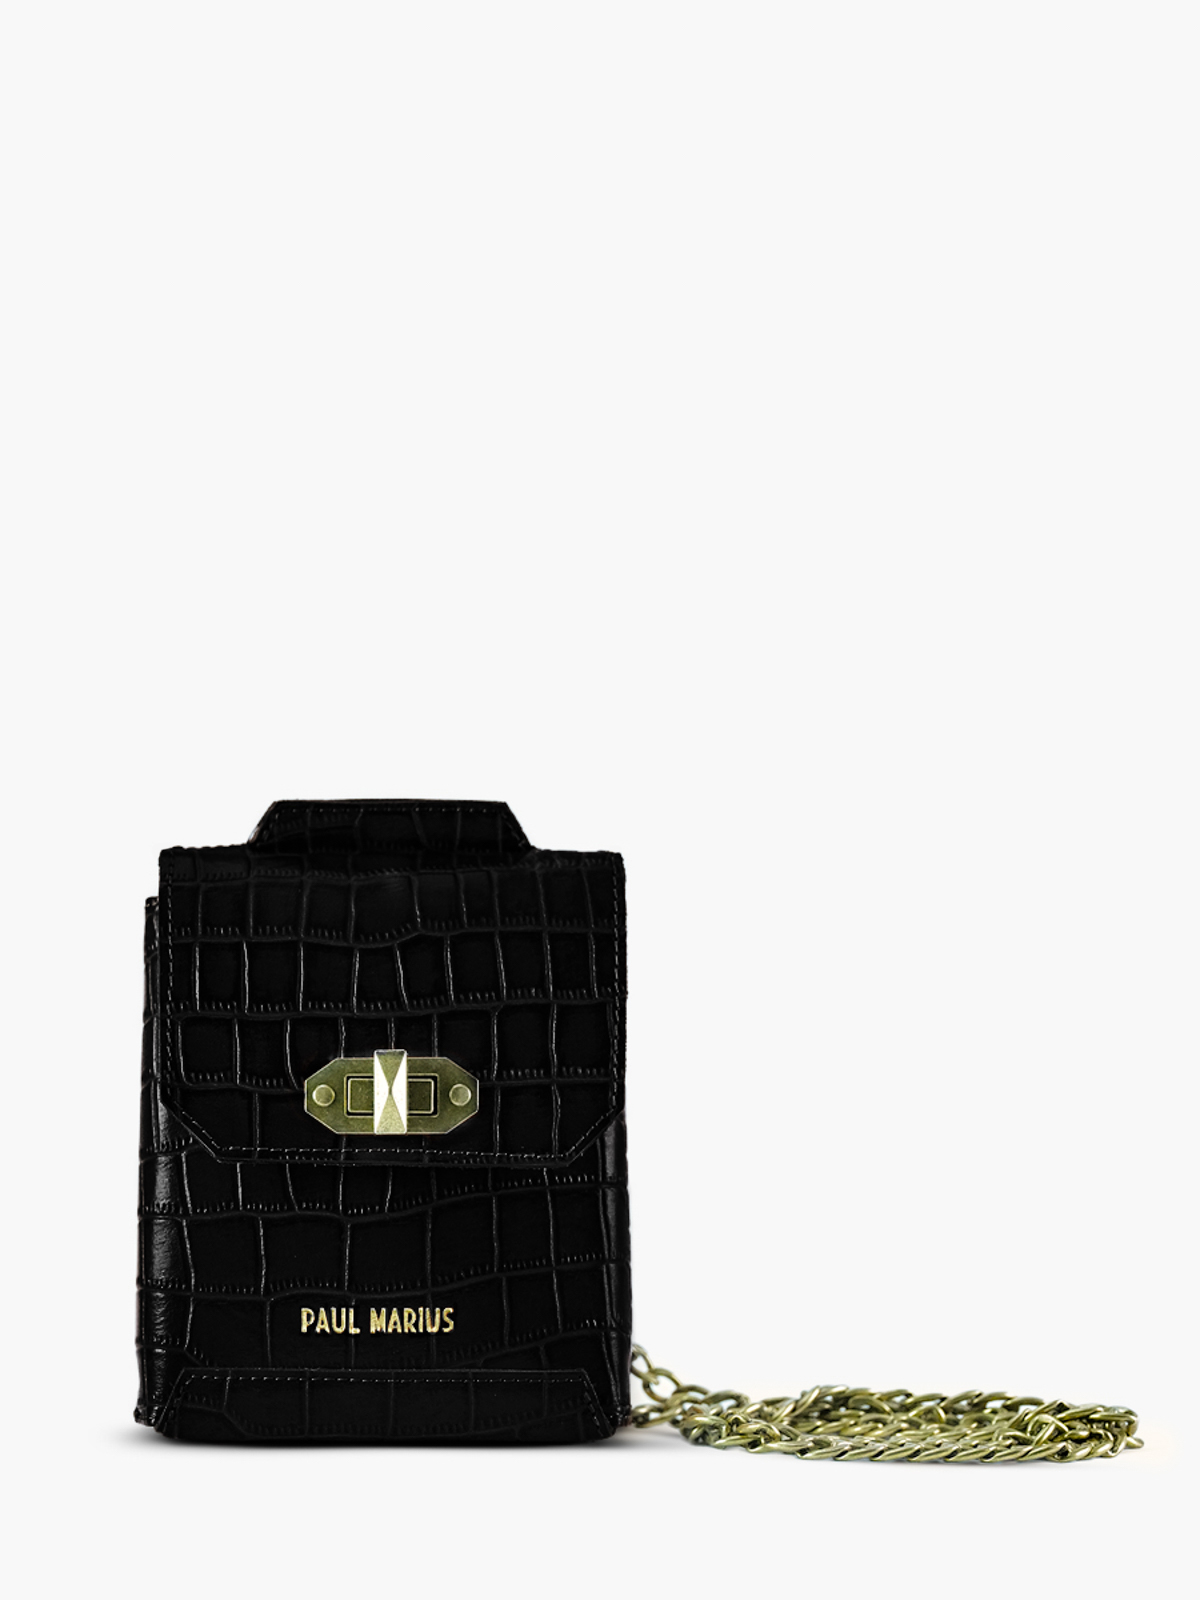 leather-phone-bag-for-woman-black-front-view-picture-agathe-alligator-jet-black-paul-marius-3760125357454